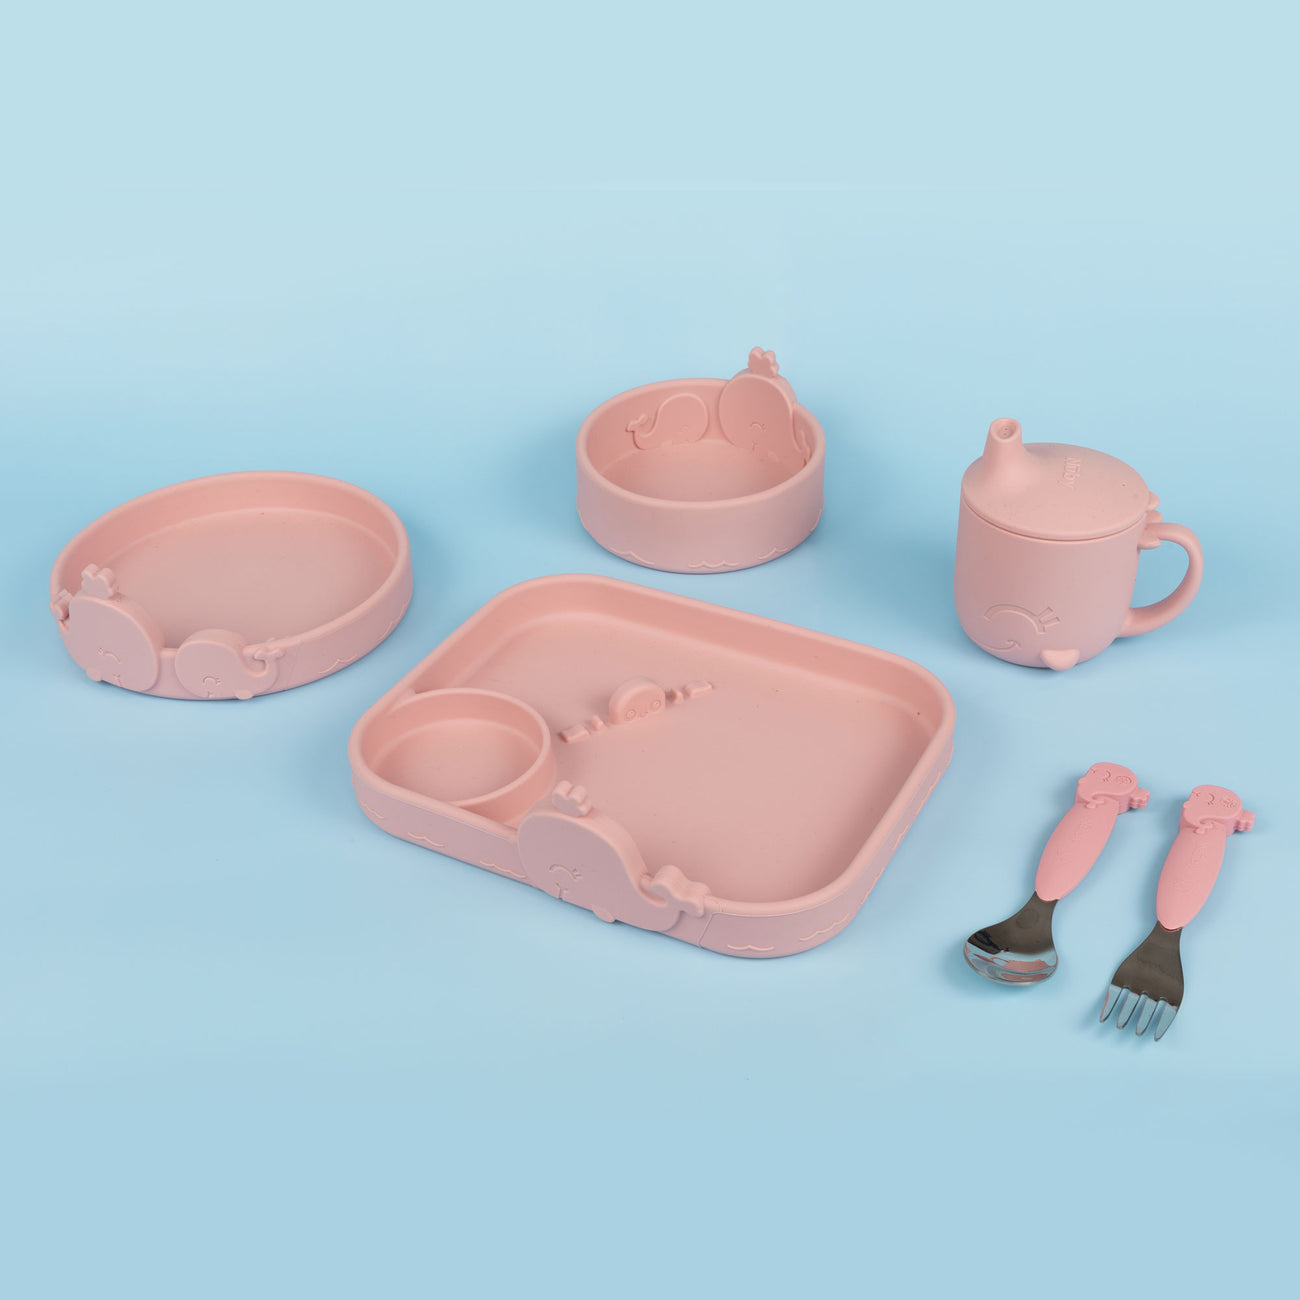 Animal Friends 6-Piece Dinnerware Set - Pink Whale